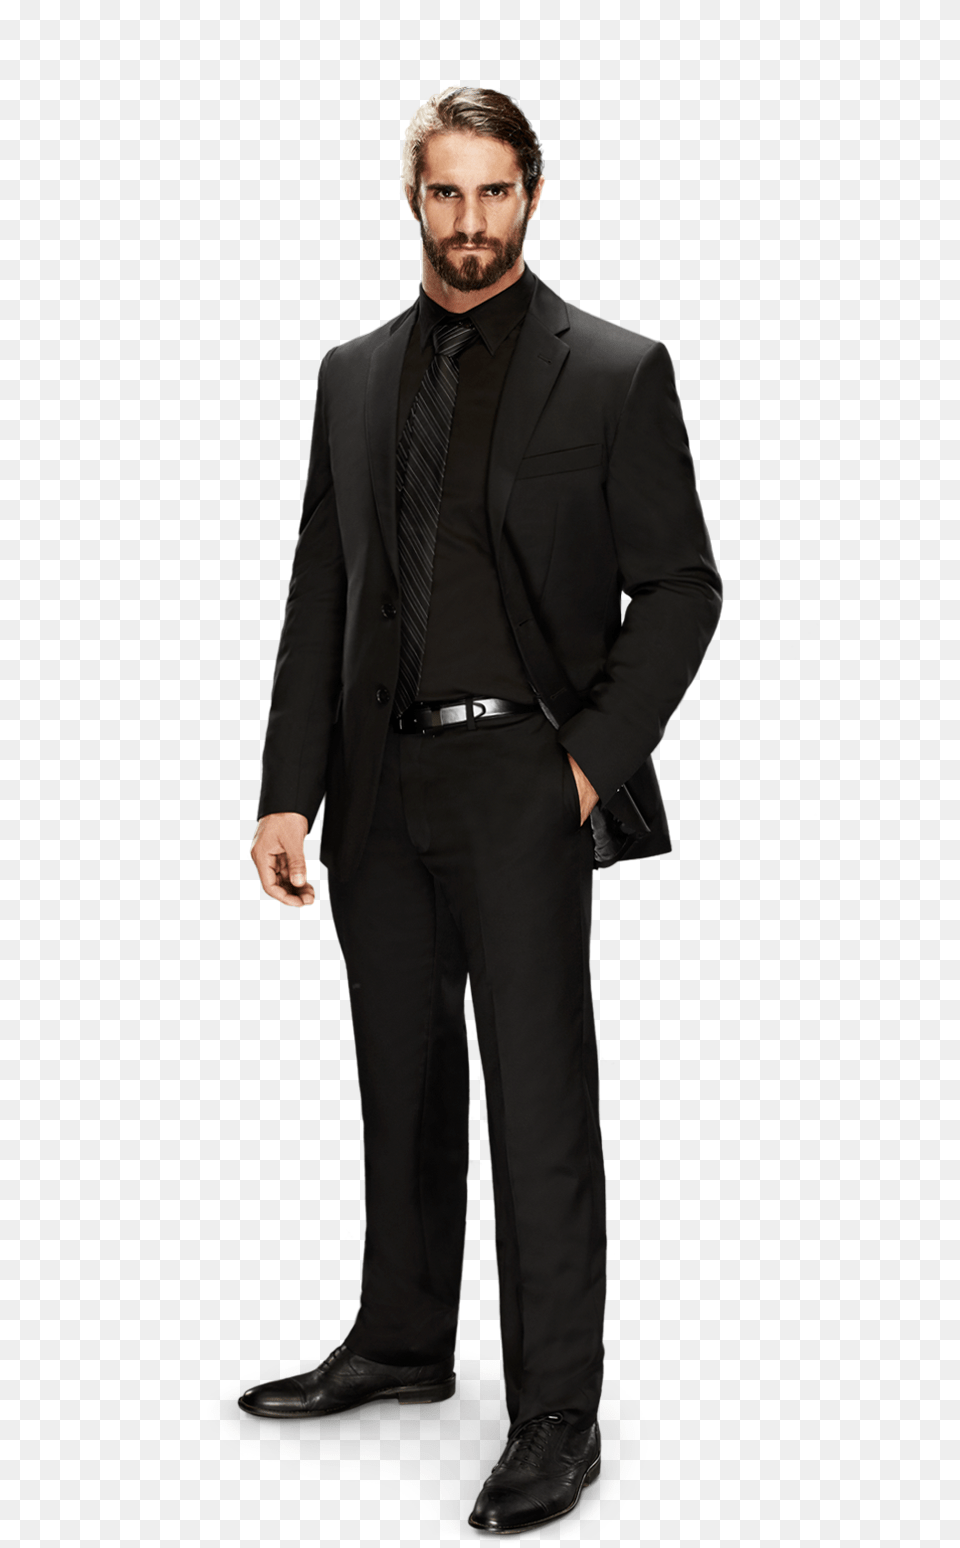 Hd Undertaker Free Download Undertaker, Tuxedo, Formal Wear, Suit, Clothing Png